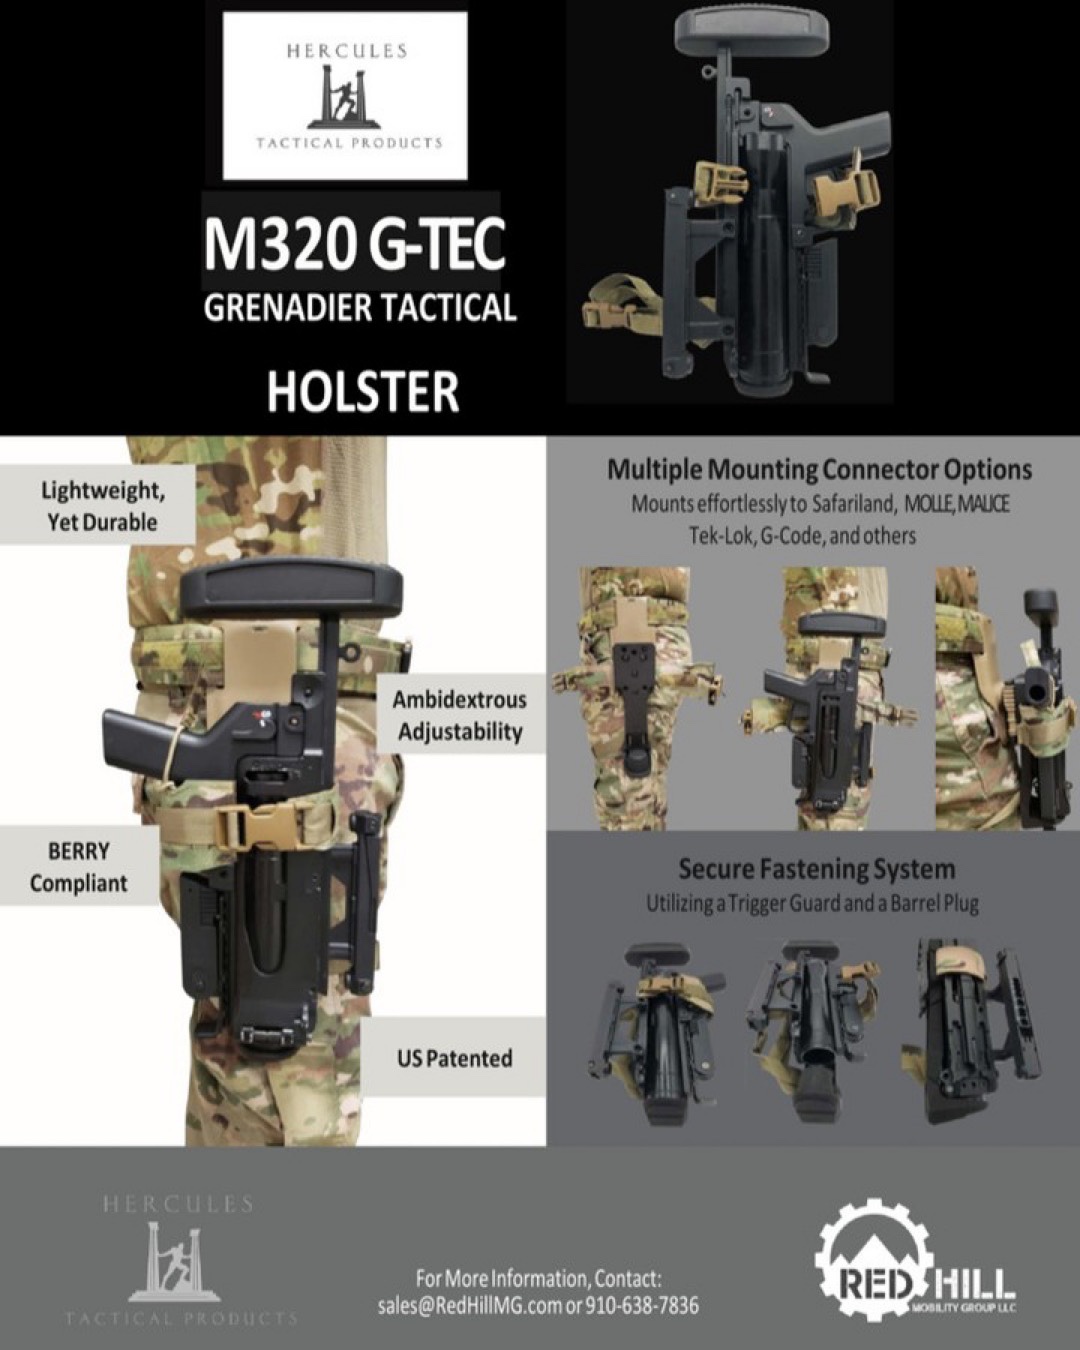 M320 G-TEC GRENADIER TACTICAL HOLSTER